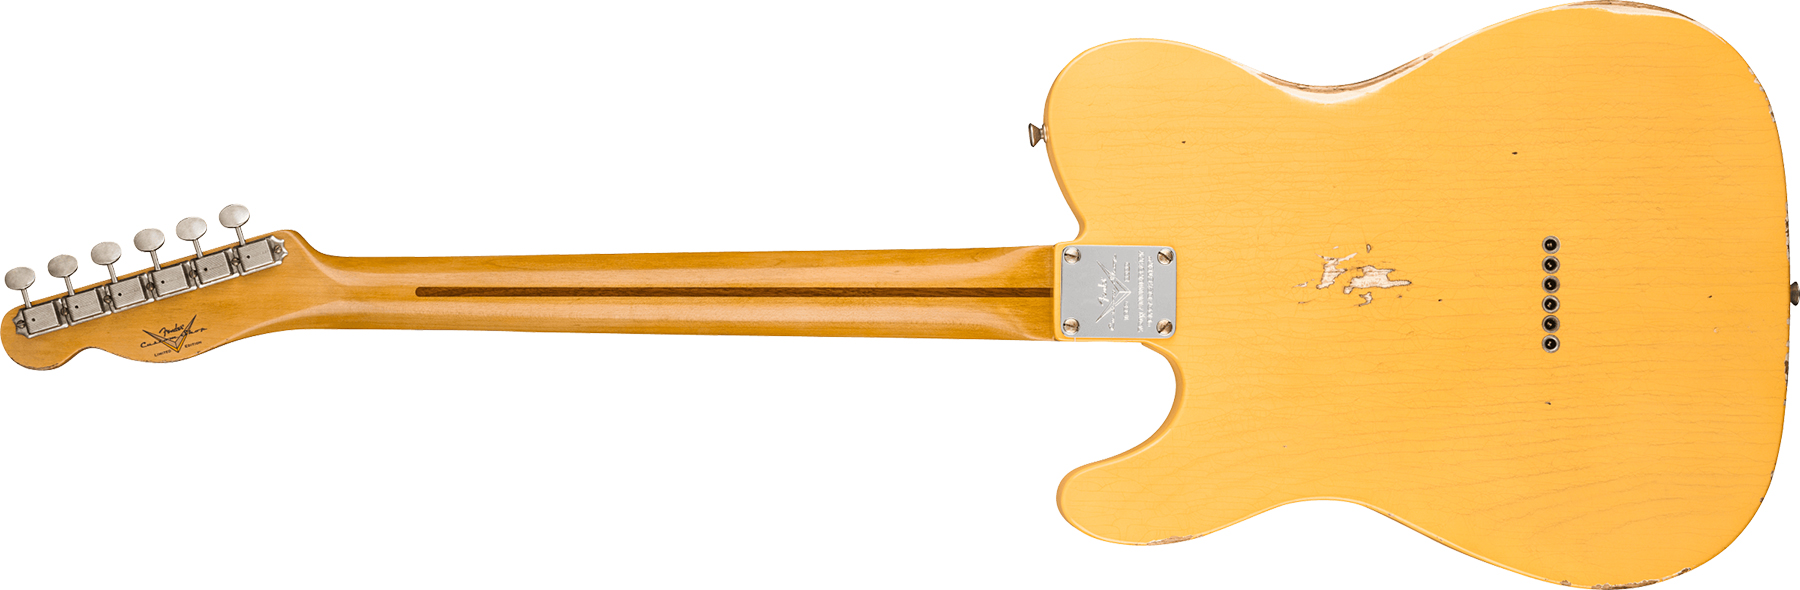 Fender Custom Shop Broadcaster Tele 70th Anniversary Ltd Mn - Relic Aged Nocaster Blonde - Tel shape electric guitar - Variation 1